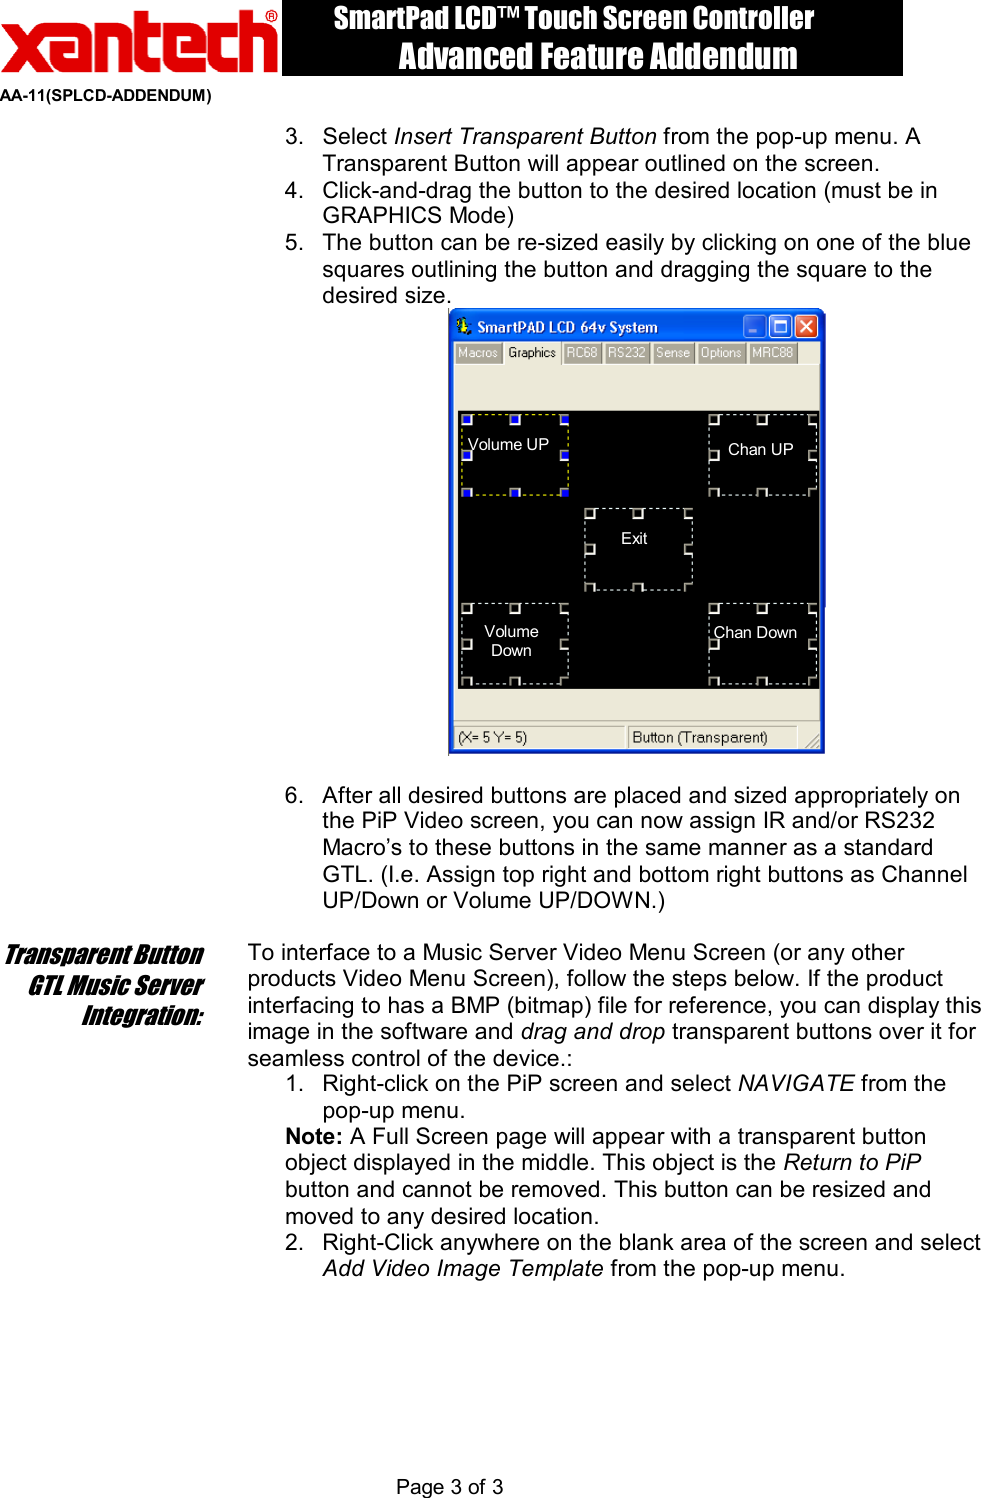 Page 3 of 10 - 18 A Aa11-Splcd-Adv-Prgm-Addendum-R2 - SPLCD-ADV-PRGM-ADDENDUM-R2 User Manual